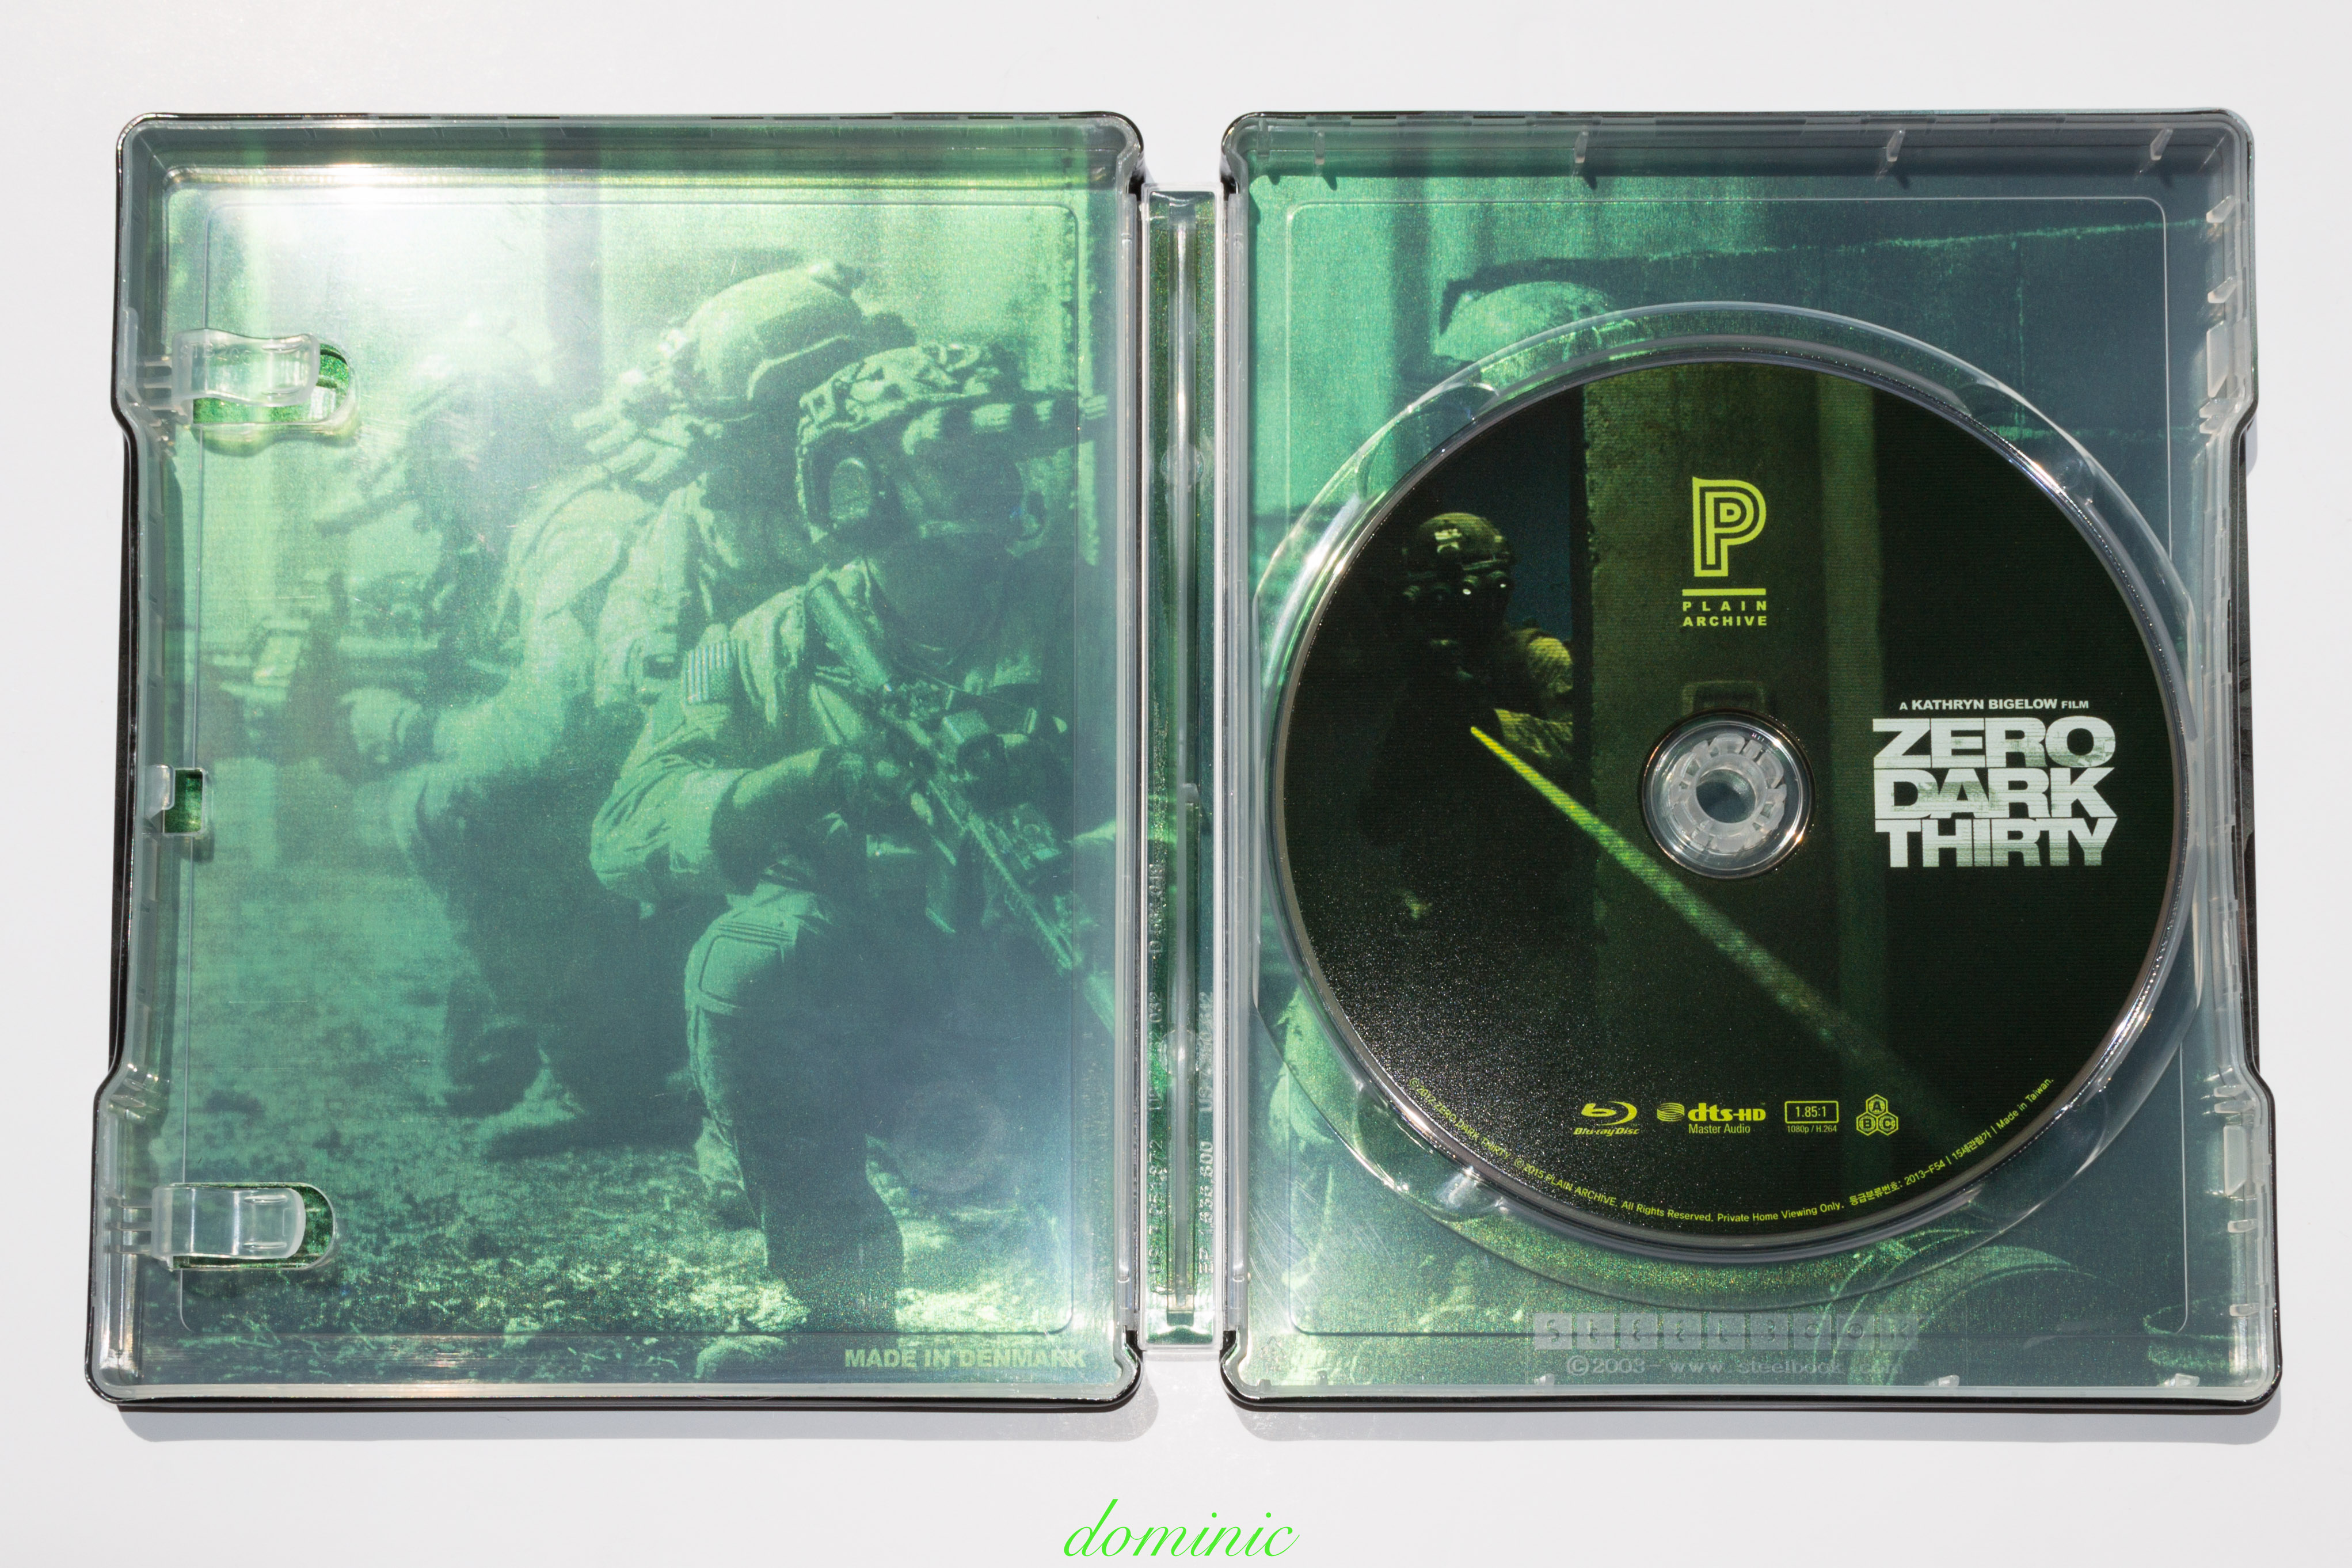 Zero Dark Thirty - Inside with disc.jpg